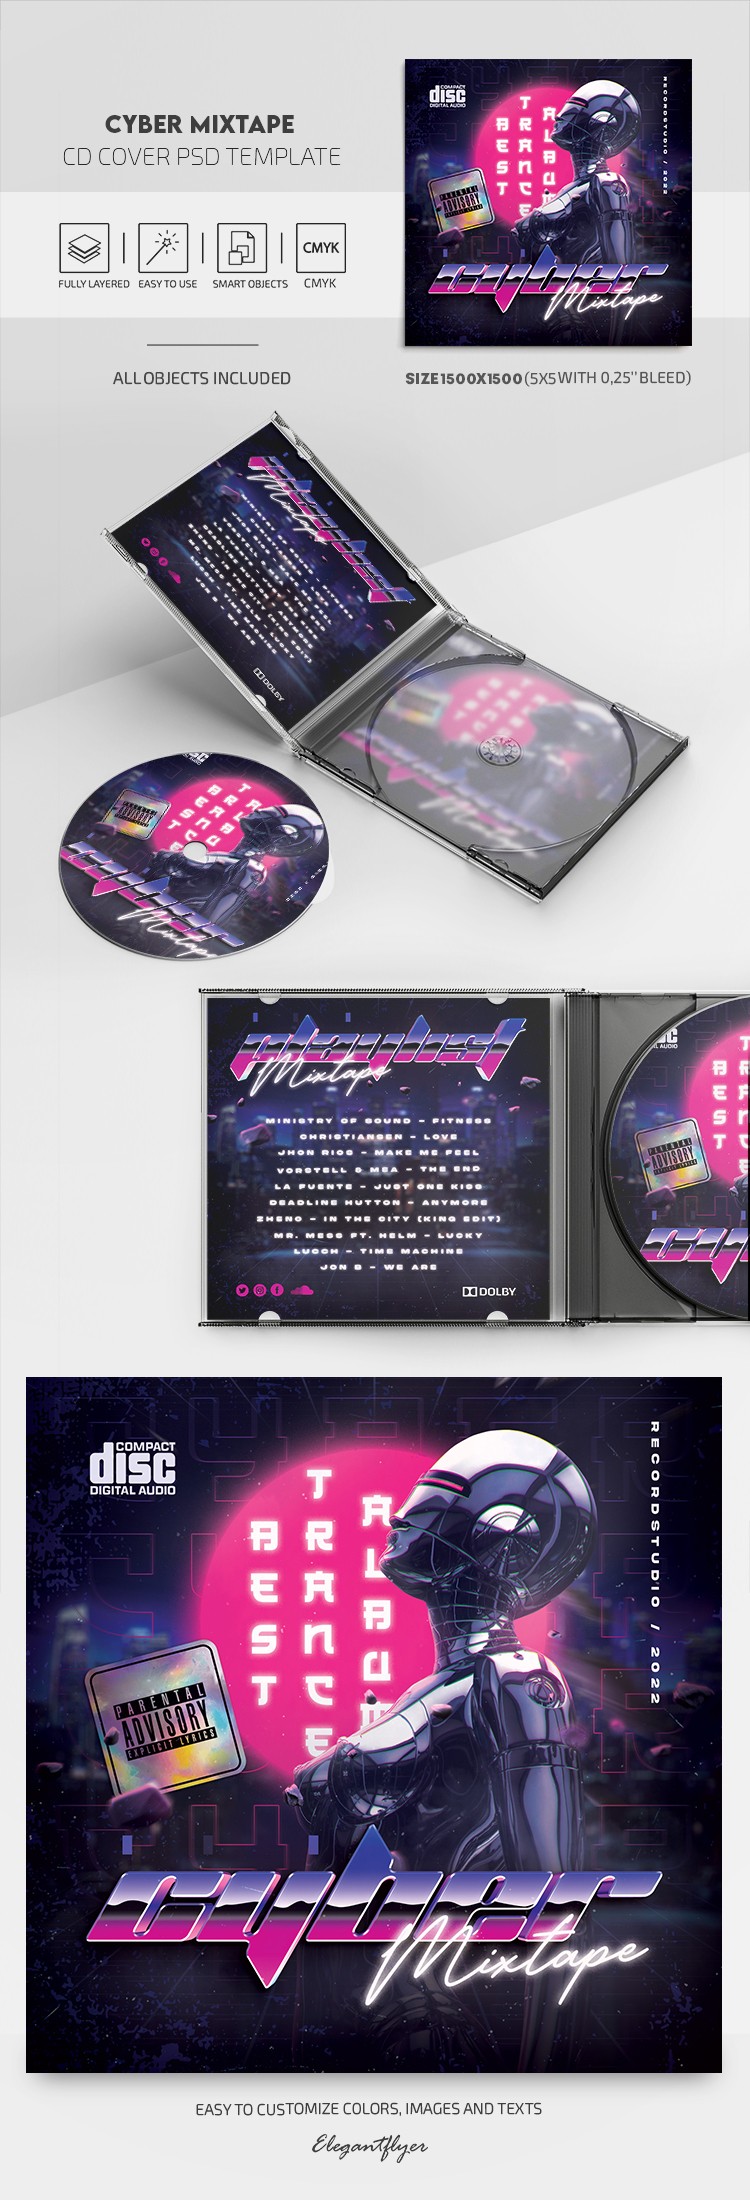 Portada del CD Cyber Mixtape by ElegantFlyer